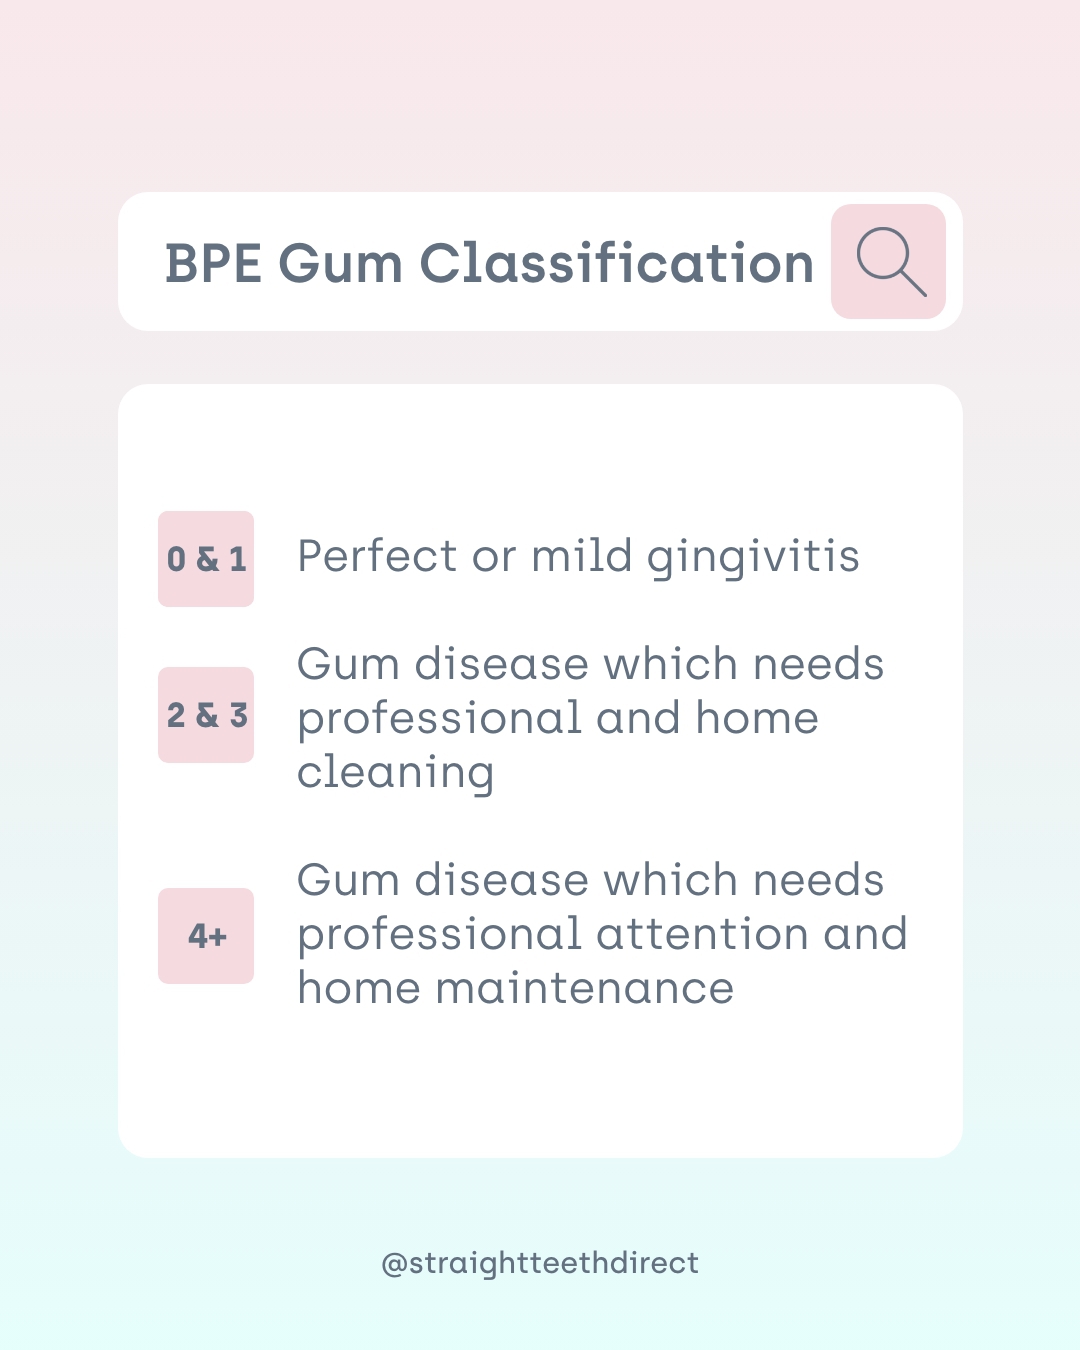 BPE gum classification